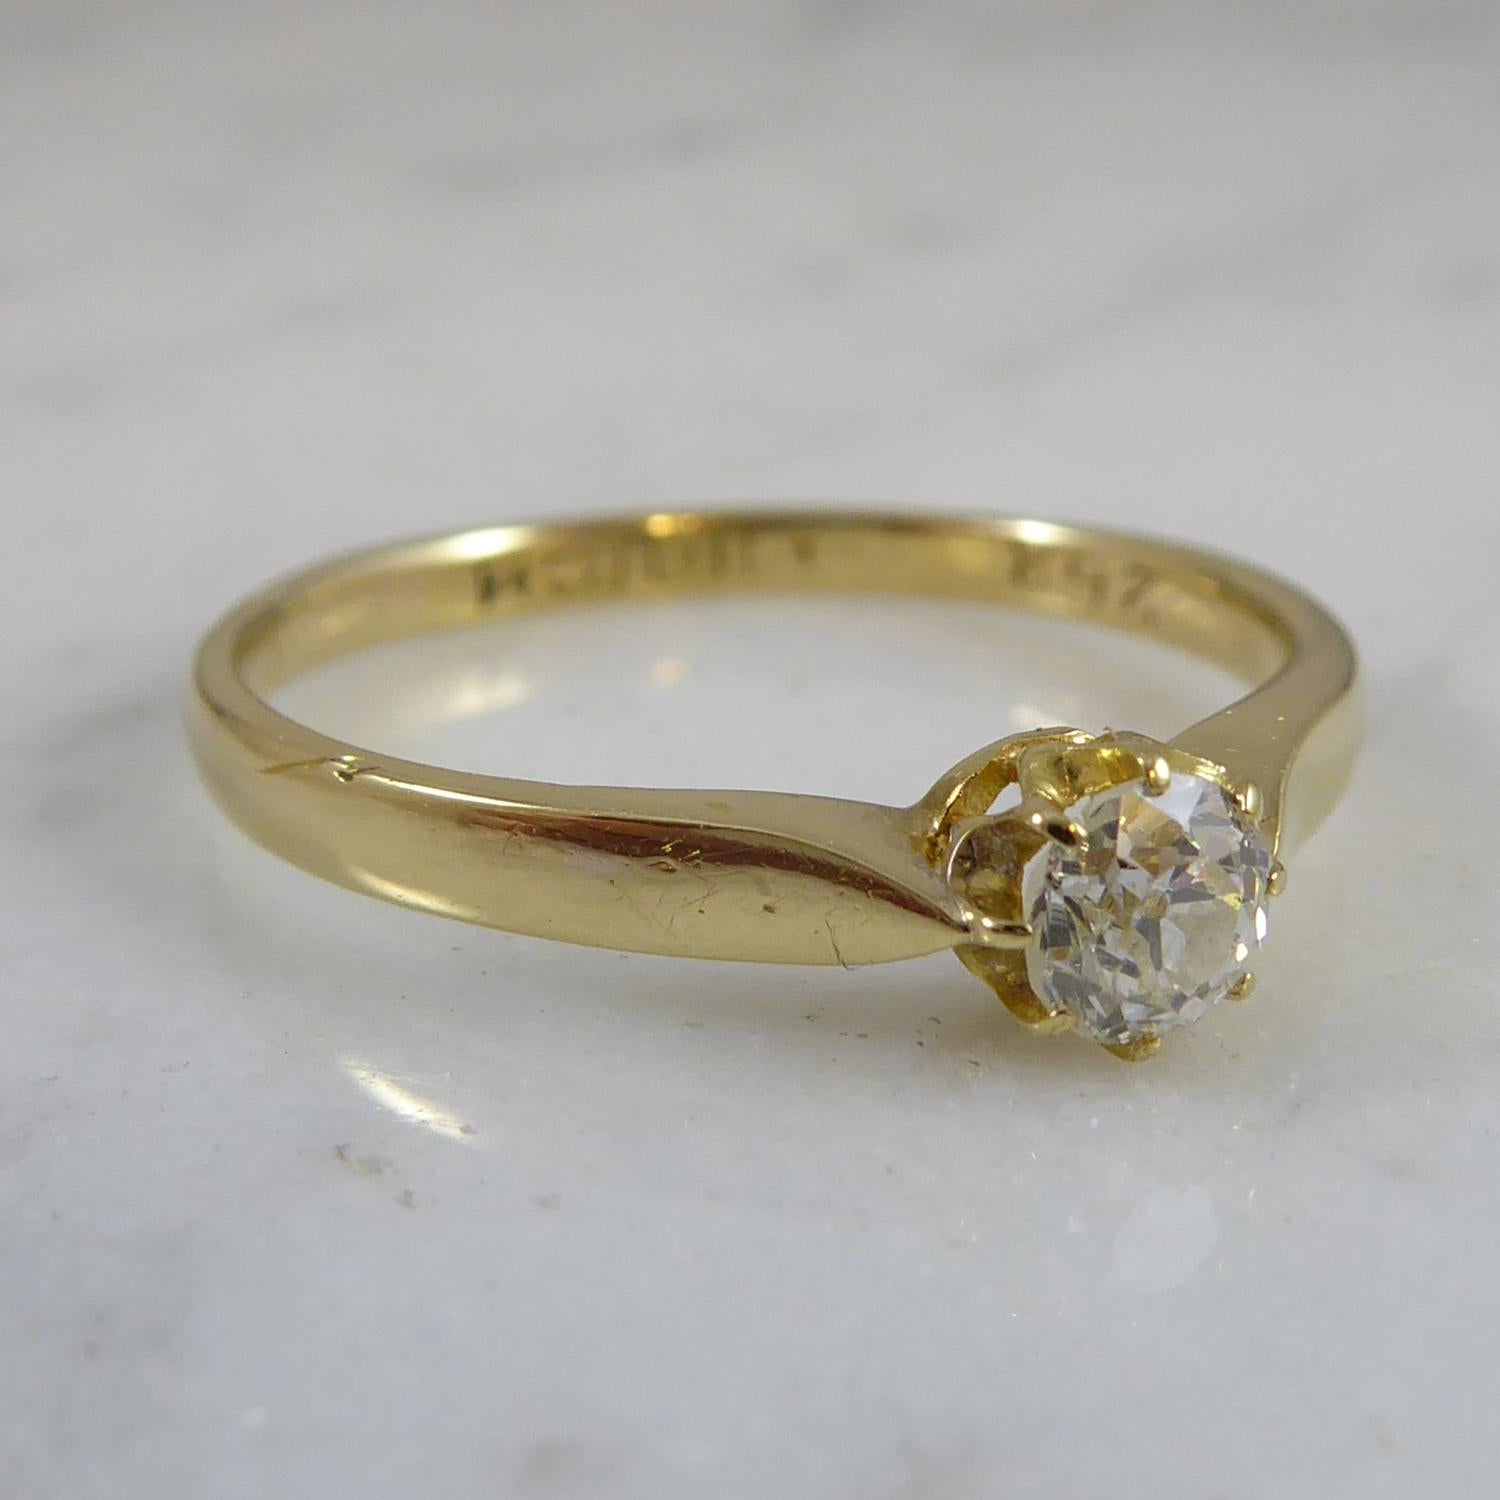 Victorian Antique Diamond Solitaire Ring in Yellow Claw Mount, Hallmarked Birmingham 1899